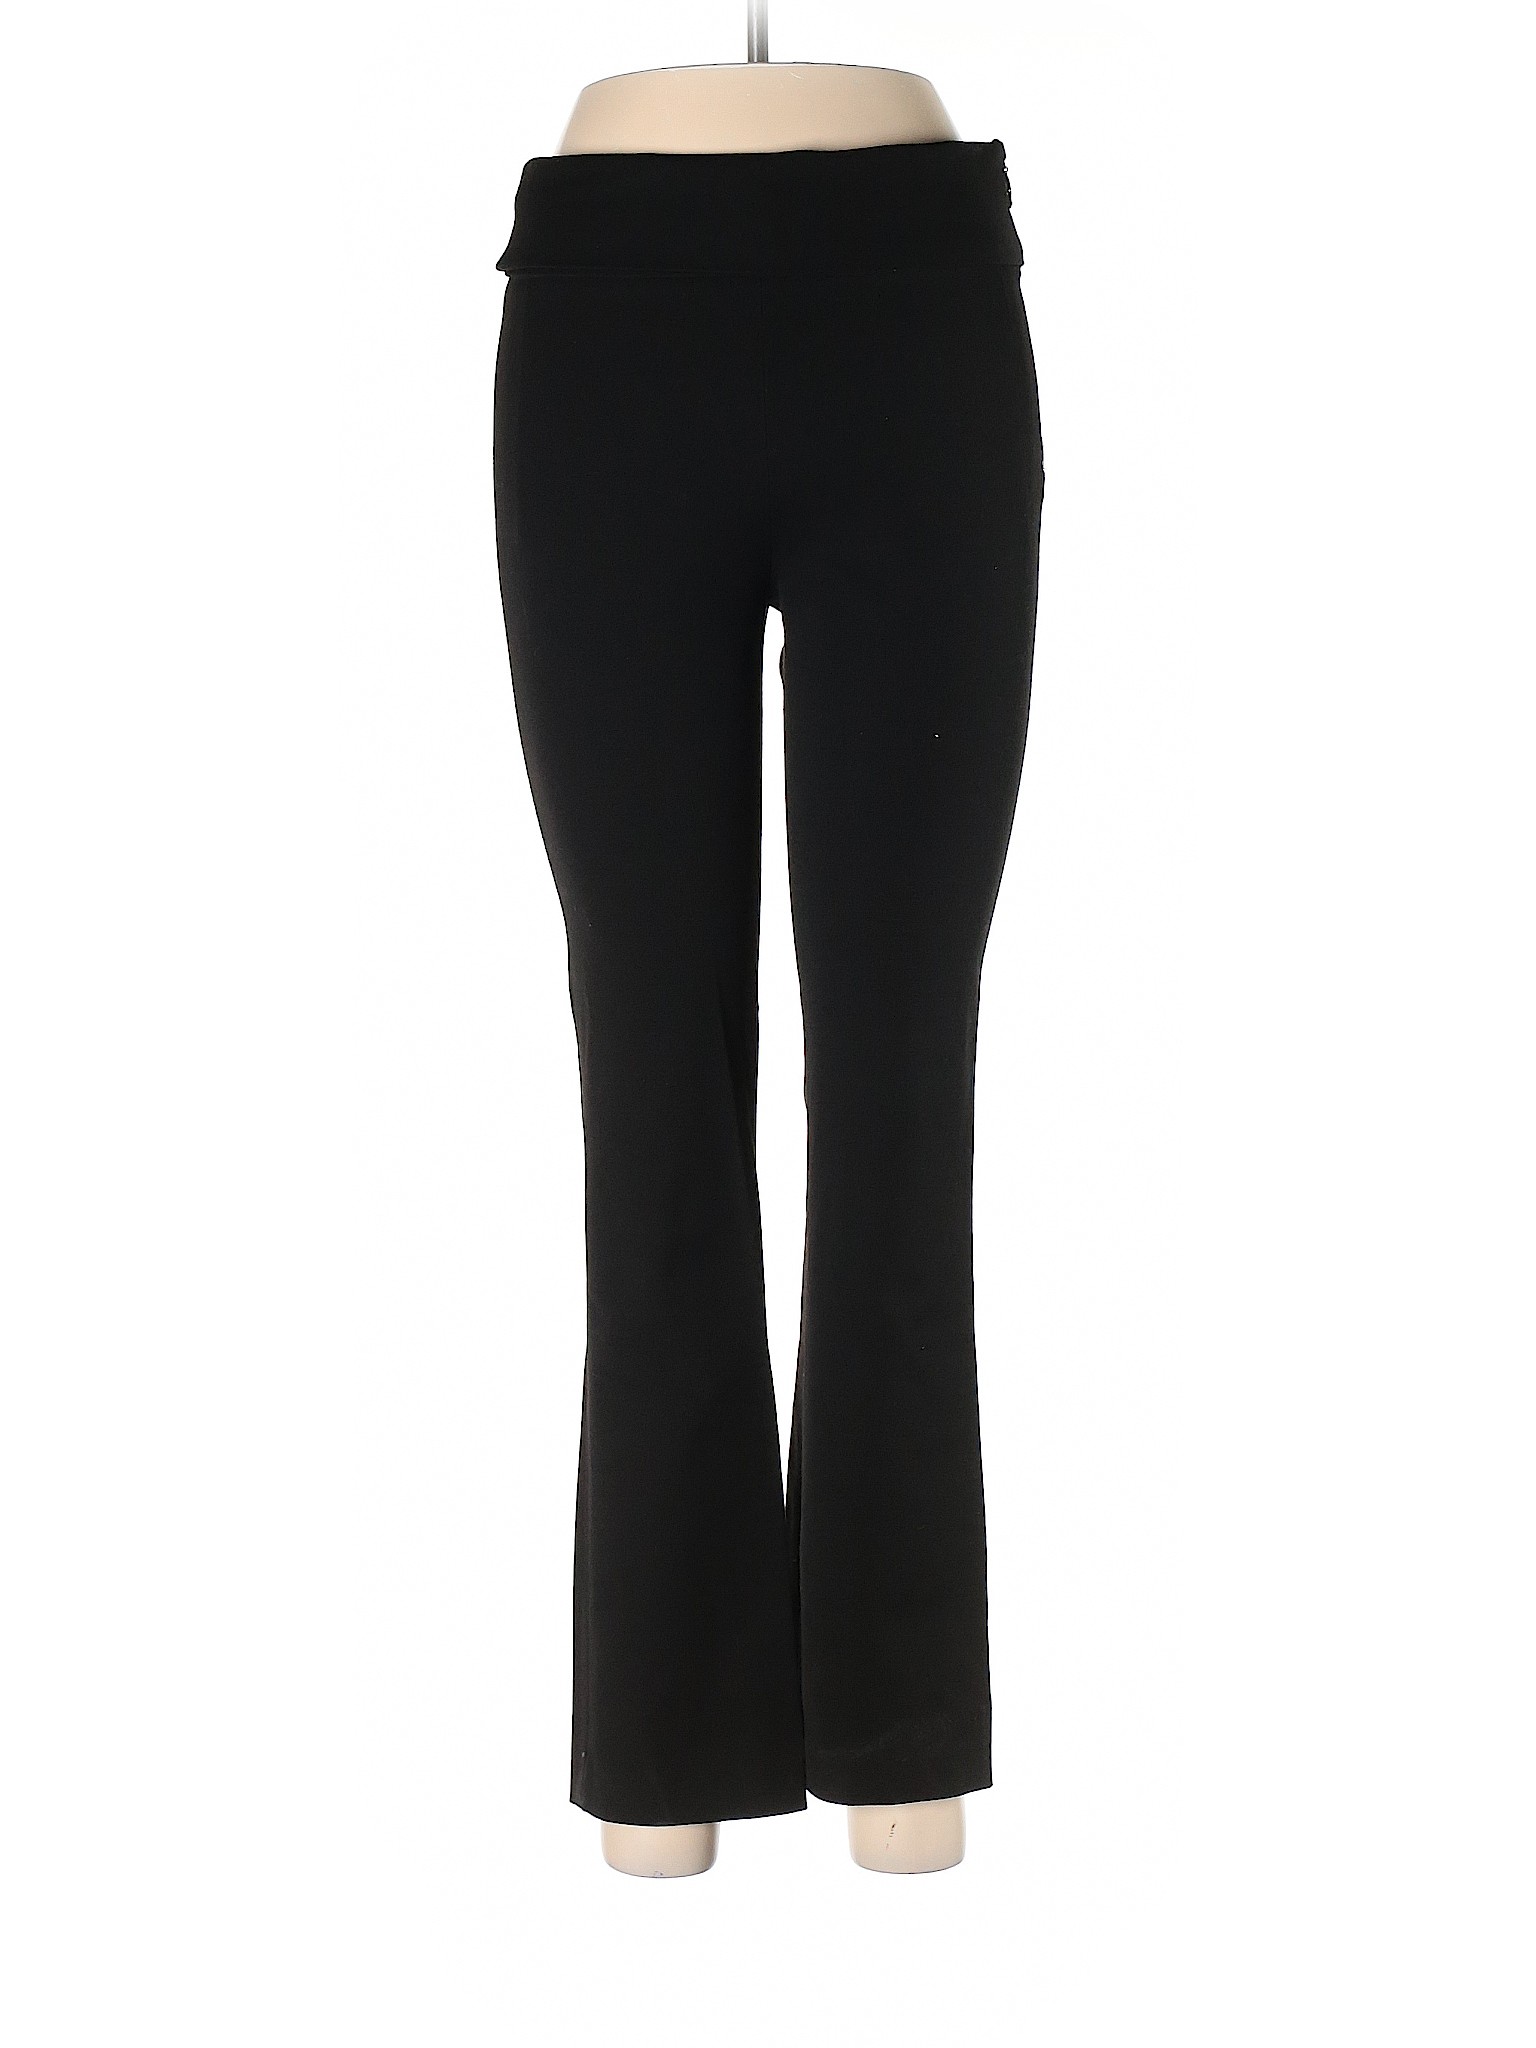 Zara Women Black Casual Pants S | eBay